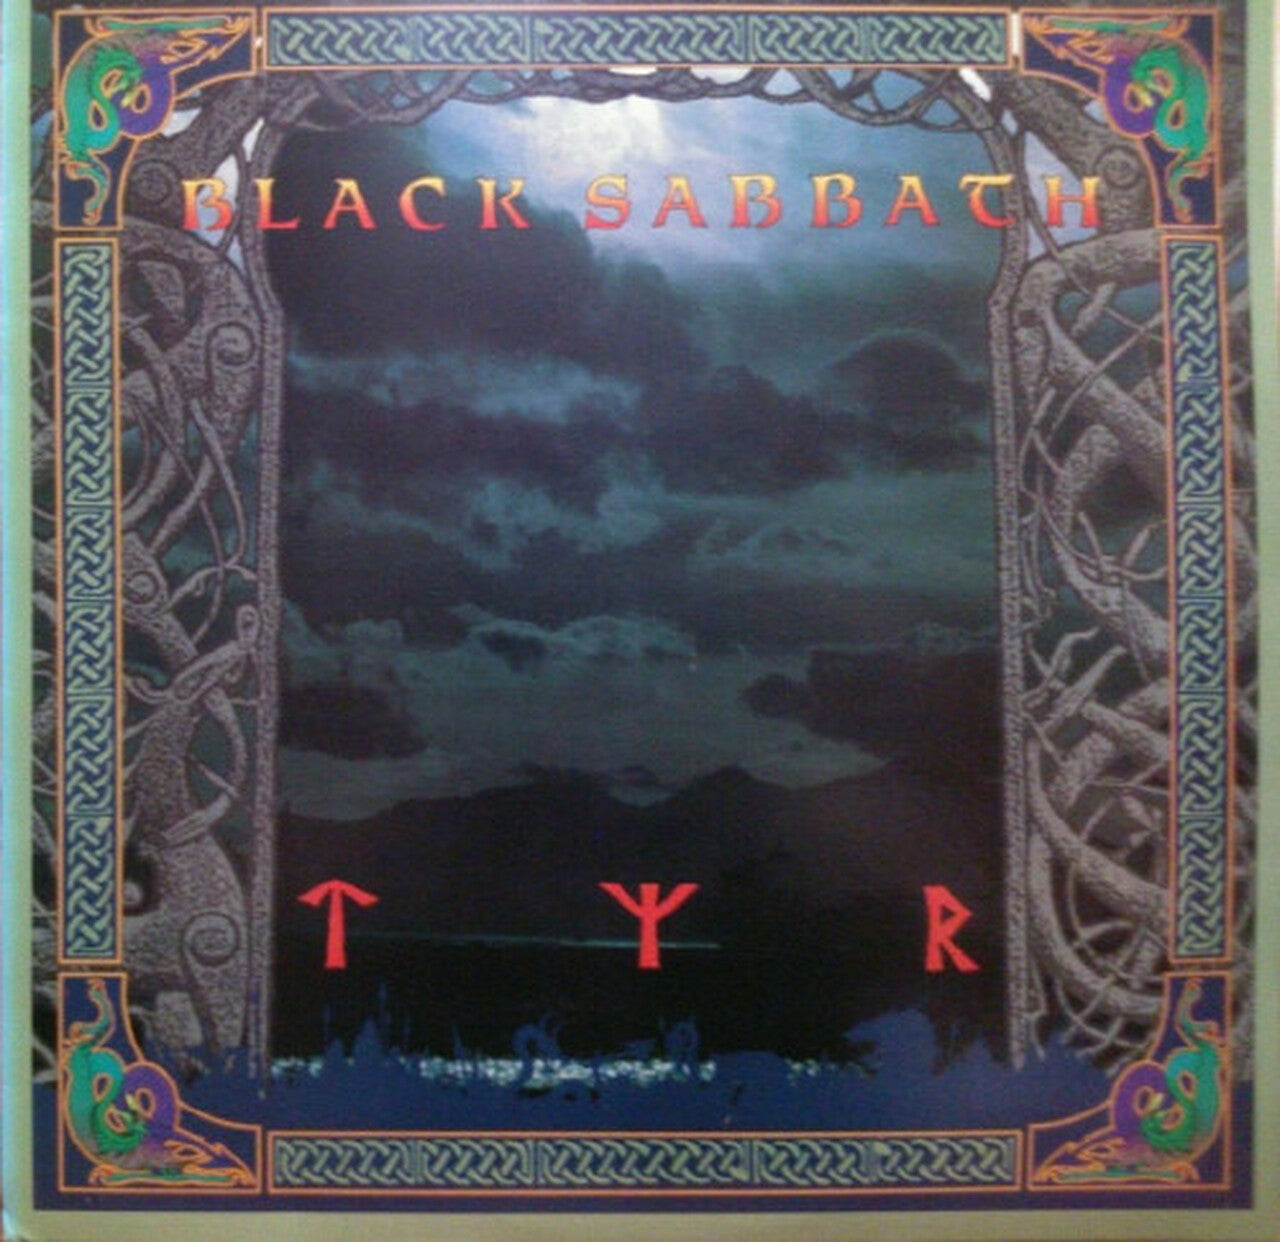 Black Sabbath "TYR" LP